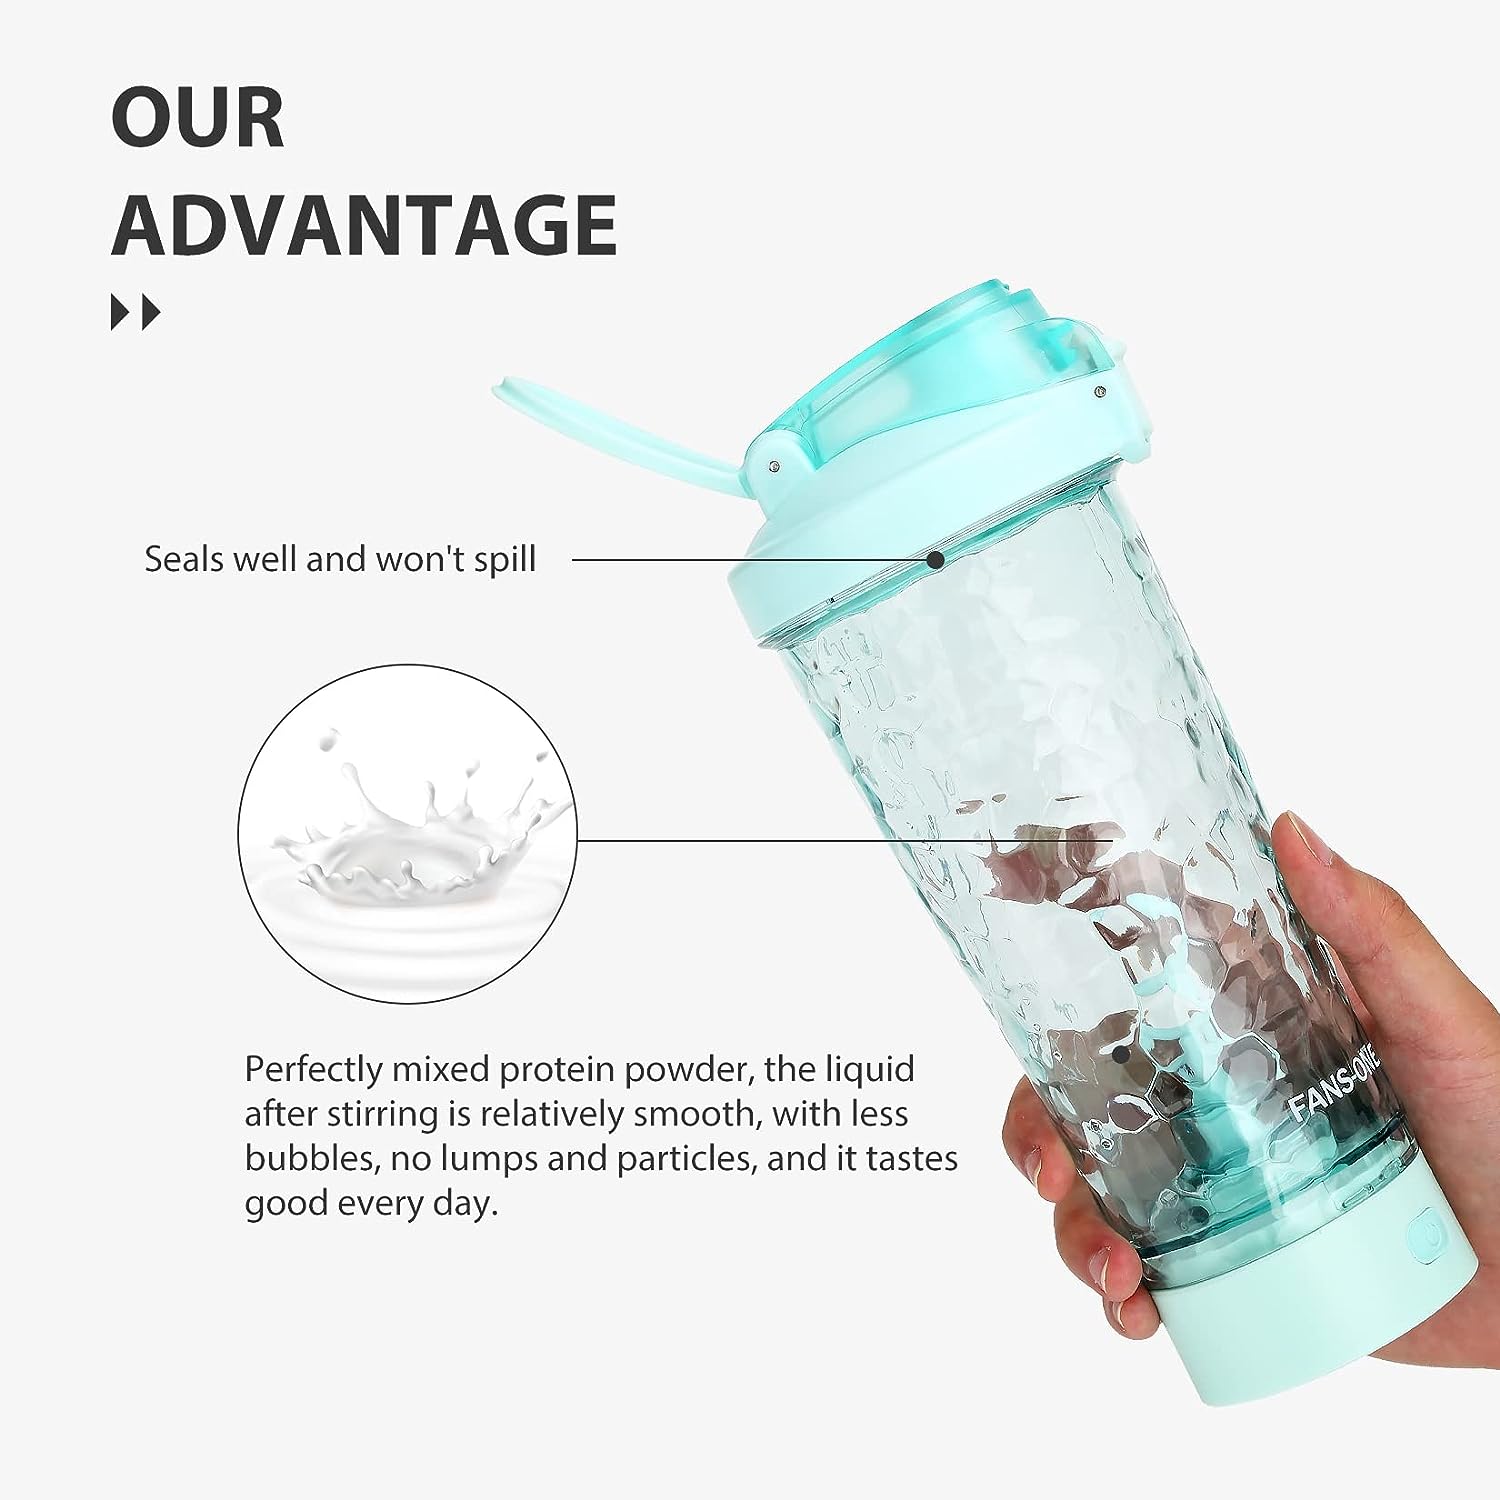 FANS-ONE Electric Shaker Bottle, Premium Electric Protein Shaker Blender  Bottle